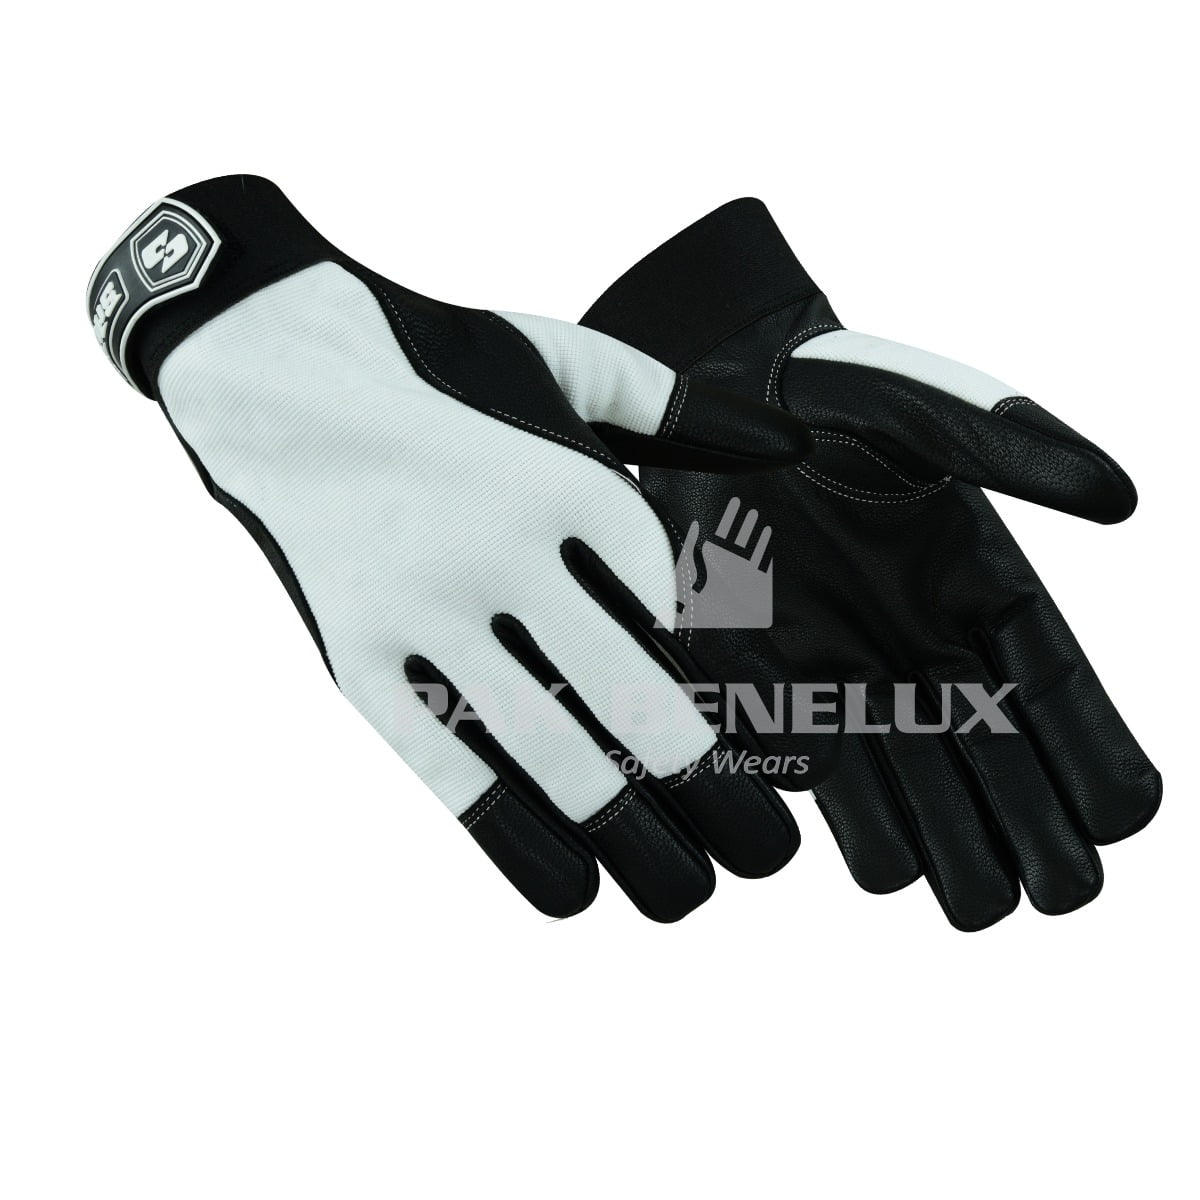 Mecahinc Gloves Manufacturer in Pakistan